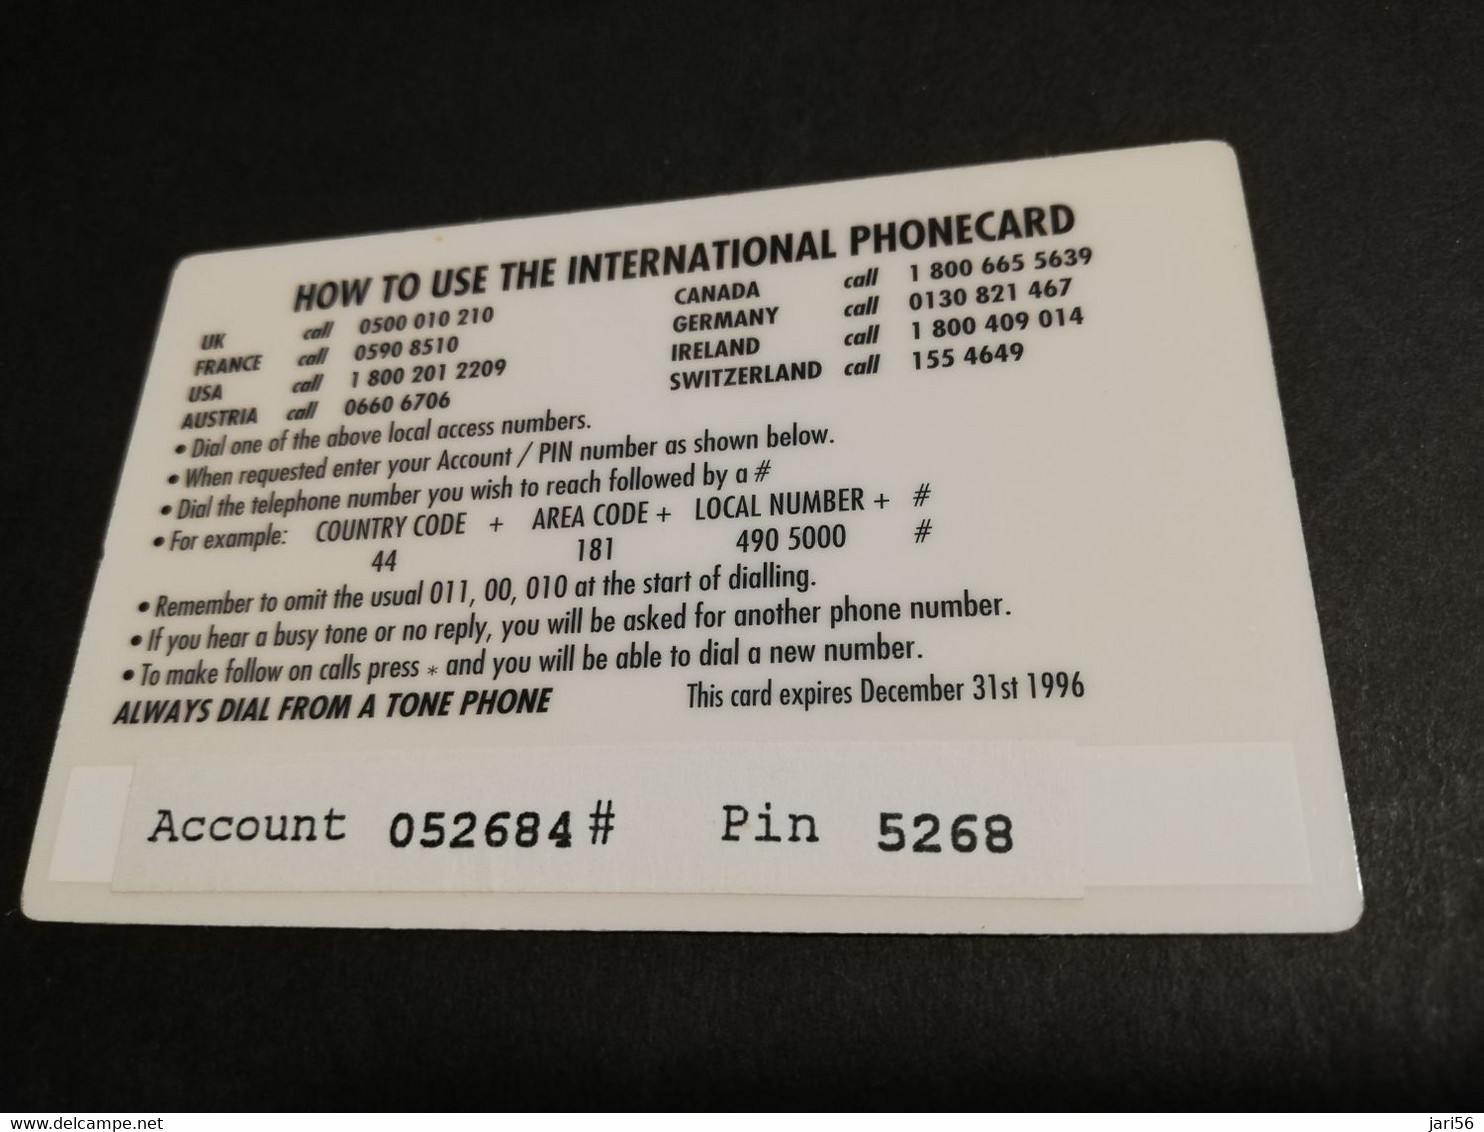 GREAT BRITAIN   3 POUND  AIR PLANES  B-17   DIT PHONECARD    PREPAID CARD      **5917** - Verzamelingen